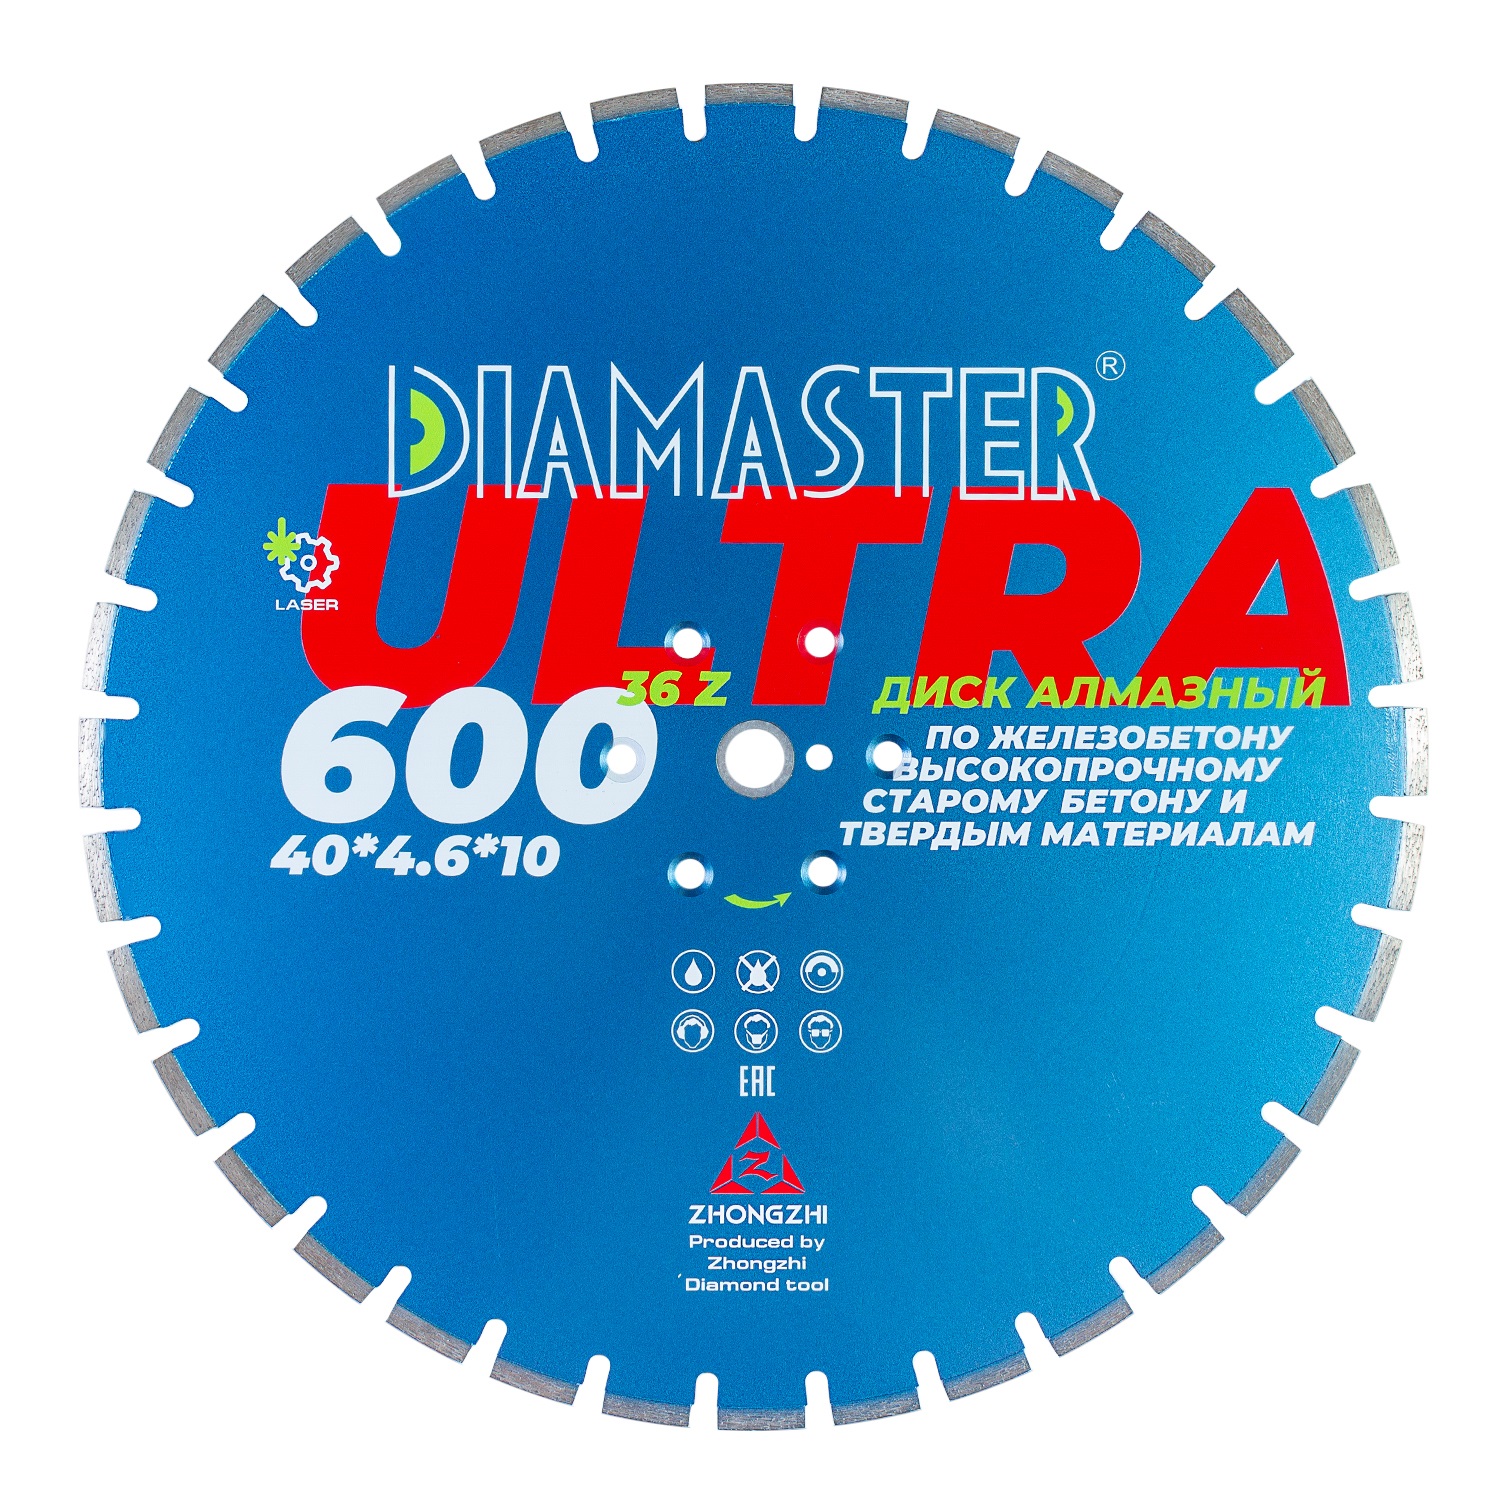 Диск сегментный Laser ULTRA д.600*3,2*25,4 (40*4,6*10)мм | 36z/железобетон/wet/dry DIAMASTER диск турбо wave gold д 230 22 2 2 8 7 мм универсал dry diamaster